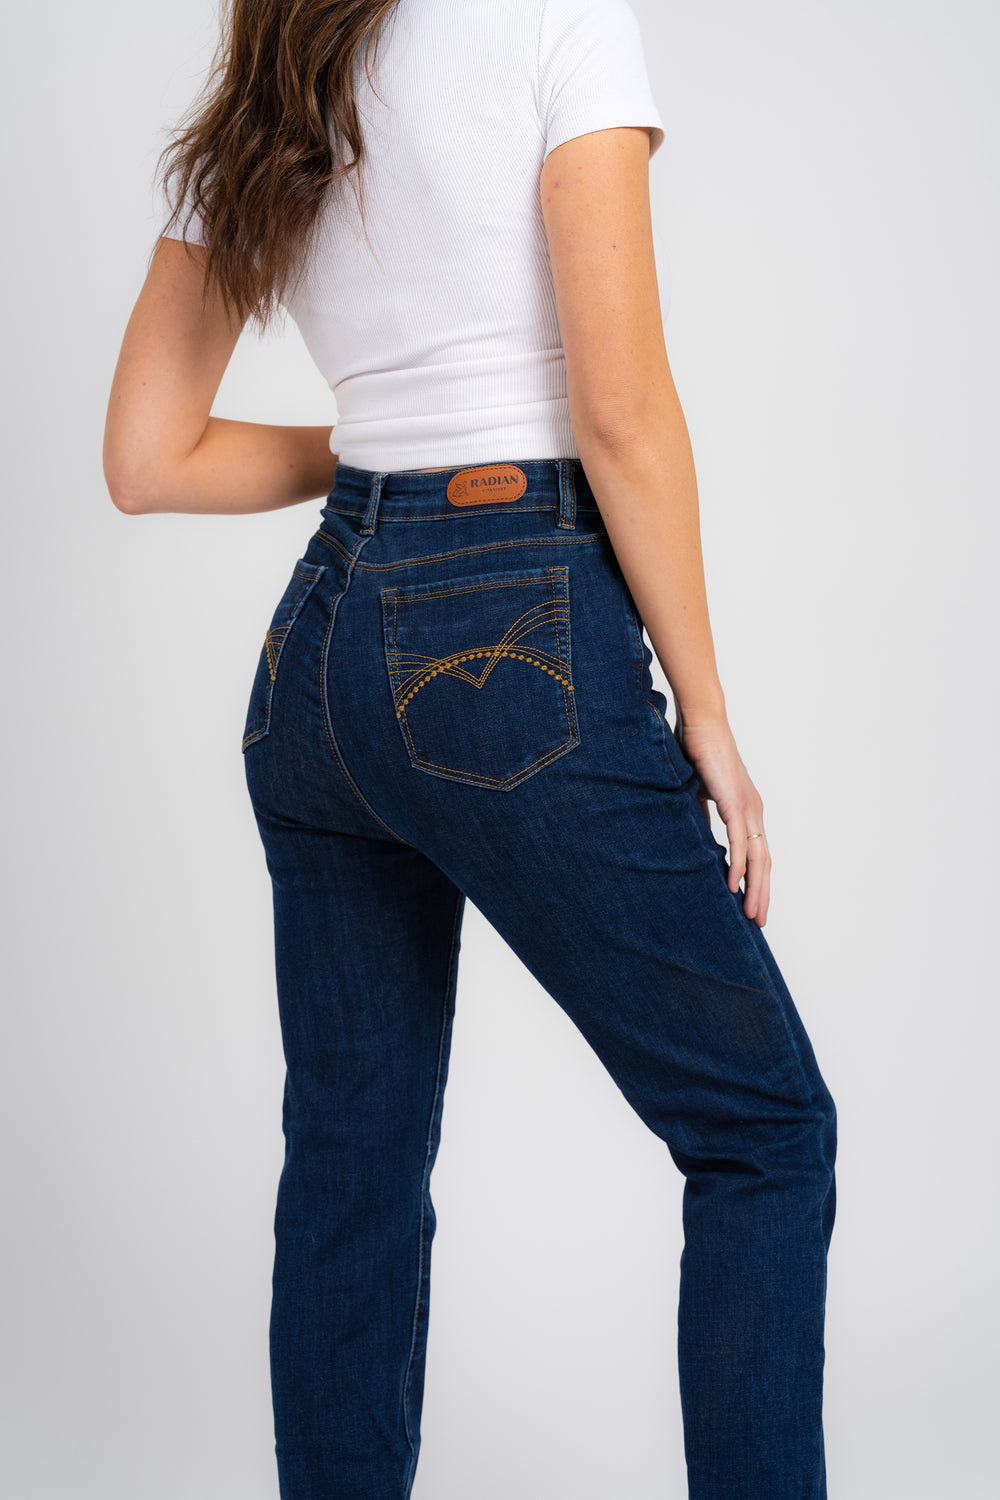 Radian - Women's Deep Pocket Straight-Leg Jeans - Indigo